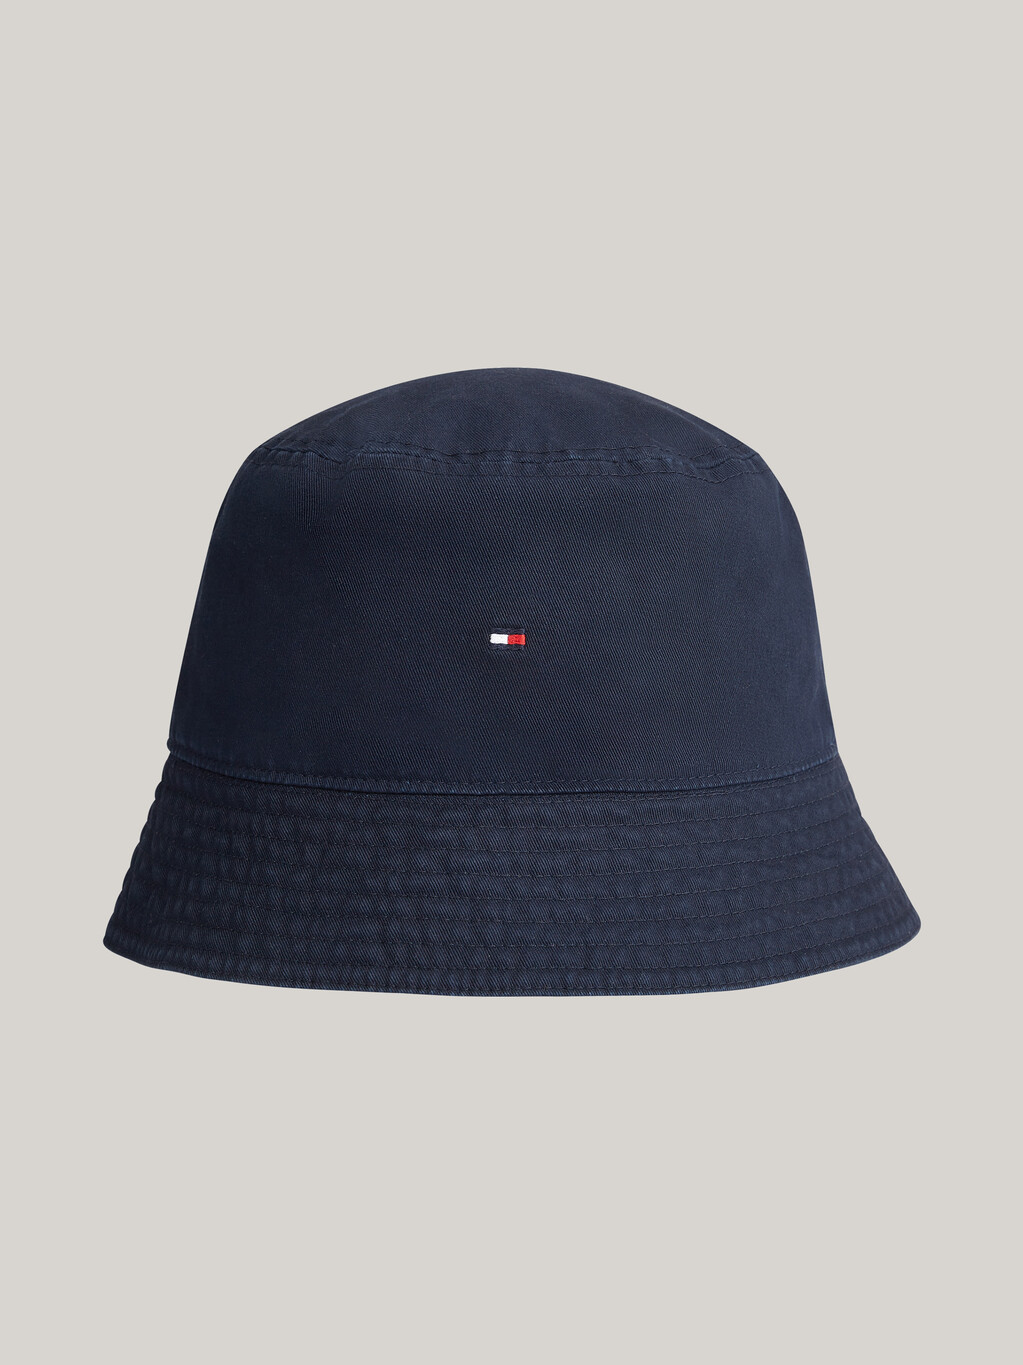 Reversible Soft Print Bucket Hat, Space Blue, hi-res